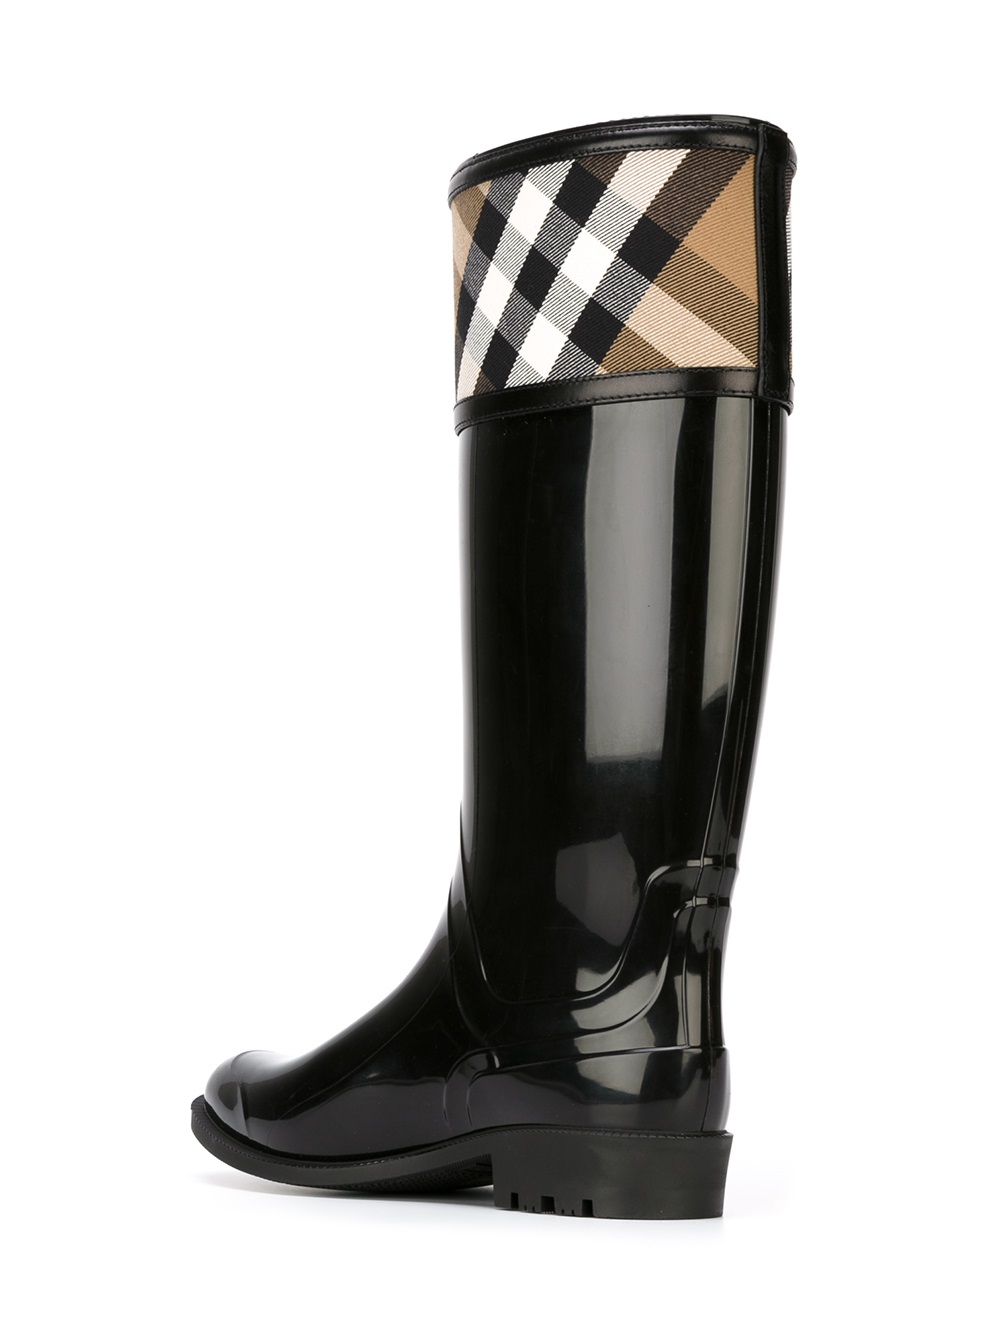 burberry crosshill rain boots